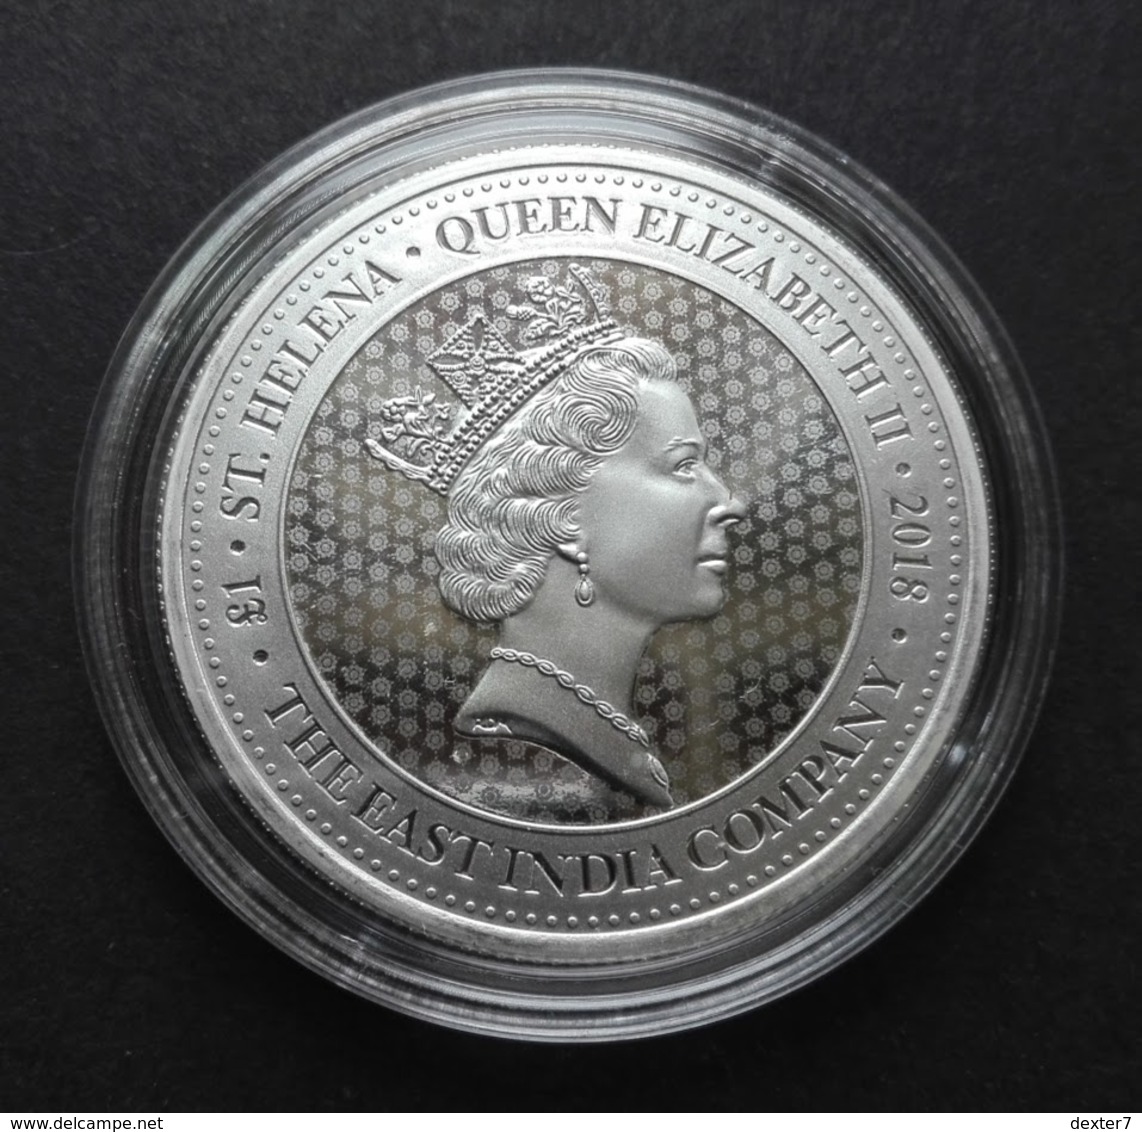 St. Helena, 1 Oz Spade Guinea East India Co. 2018 Silver 999 Pure - 1 Oncia Argento Puro Bullion - Sainte-Hélène